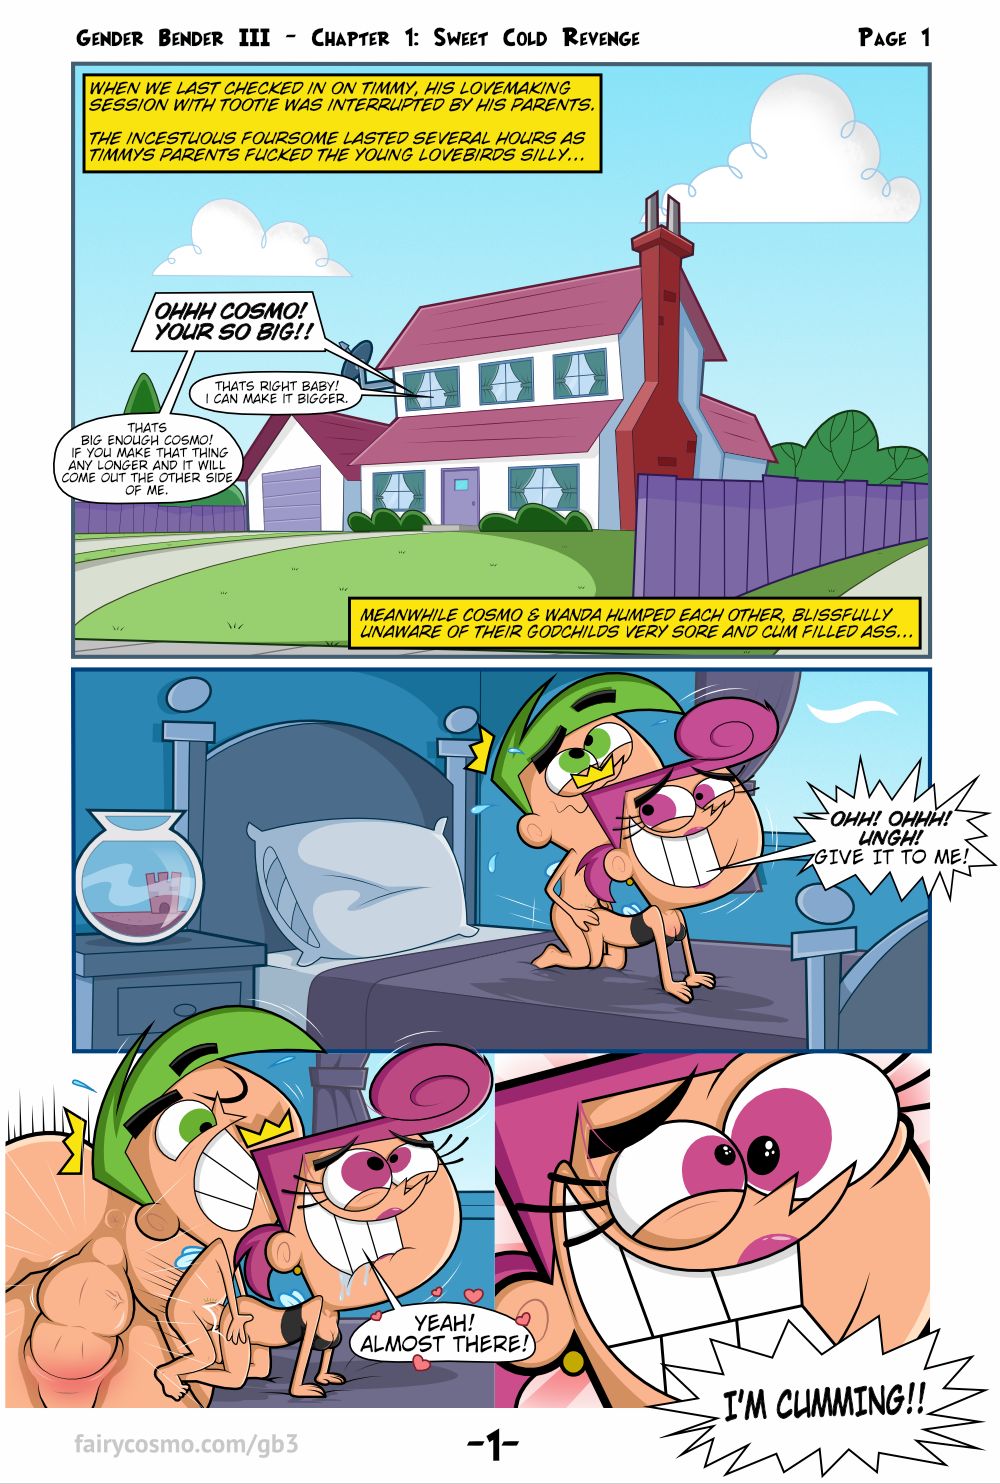 Fairly Oddparents Toon Porn - Gender Bender III (Fairly Odd Parents) by FairyCosmo - Porn Cartoon Comics